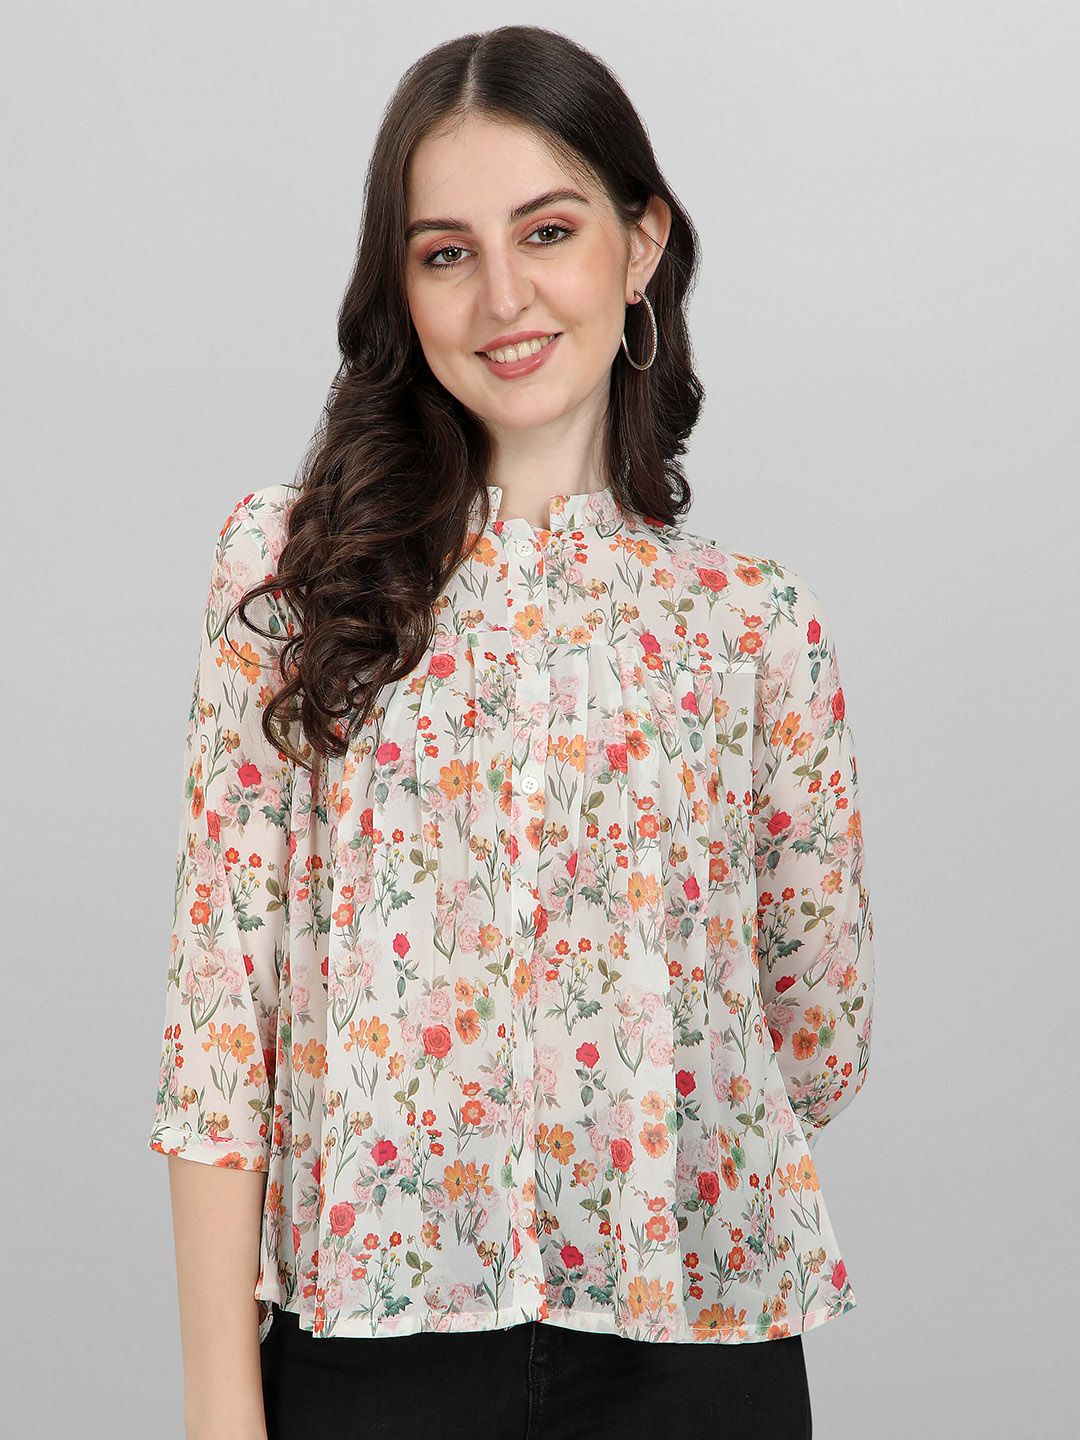 Masakali Co Women Beige Floral Print Mandarin Collar Georgette Shirt Style Top Price in India